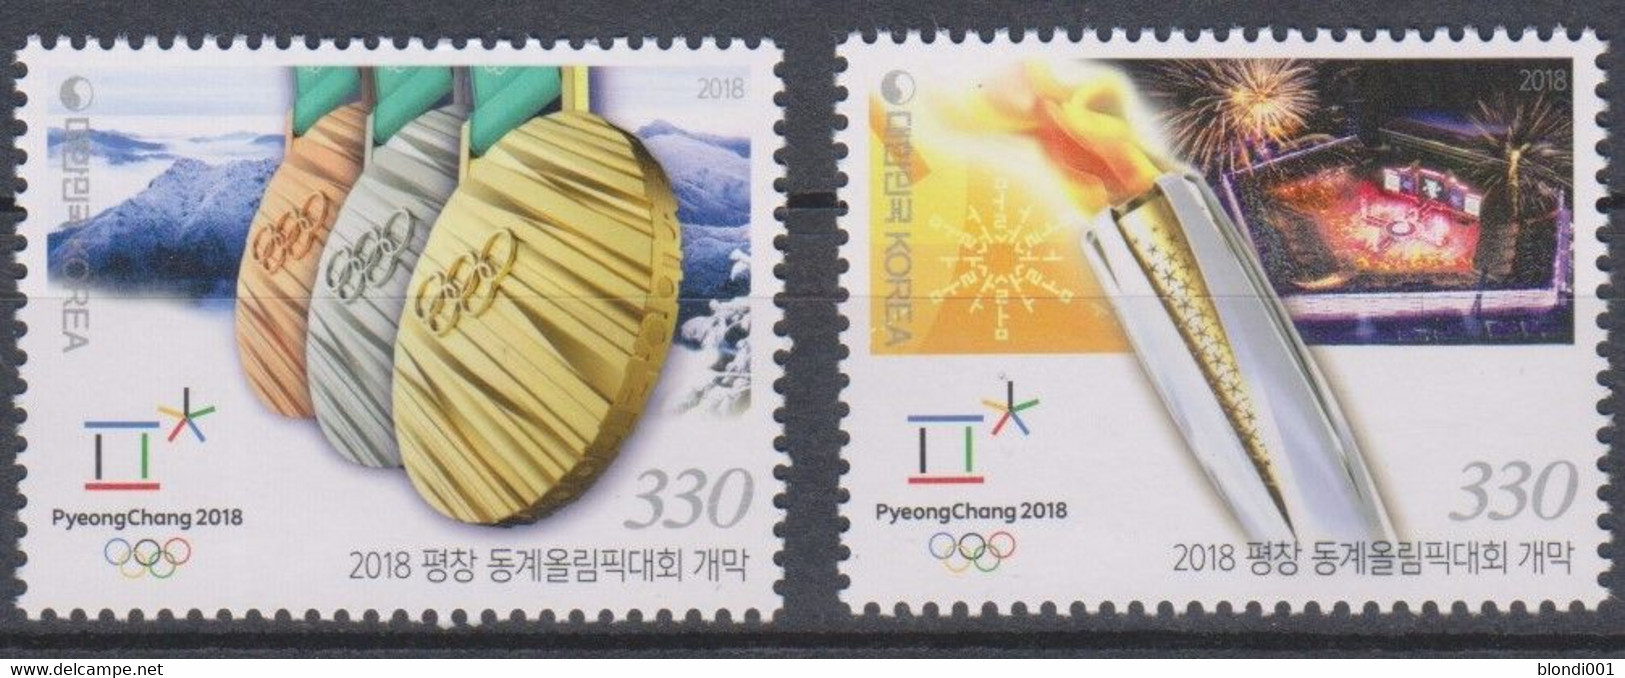 Olympics 2018 - Medals - SOUTH KOREA - Set MNH - Invierno 2018 : Pieonchang